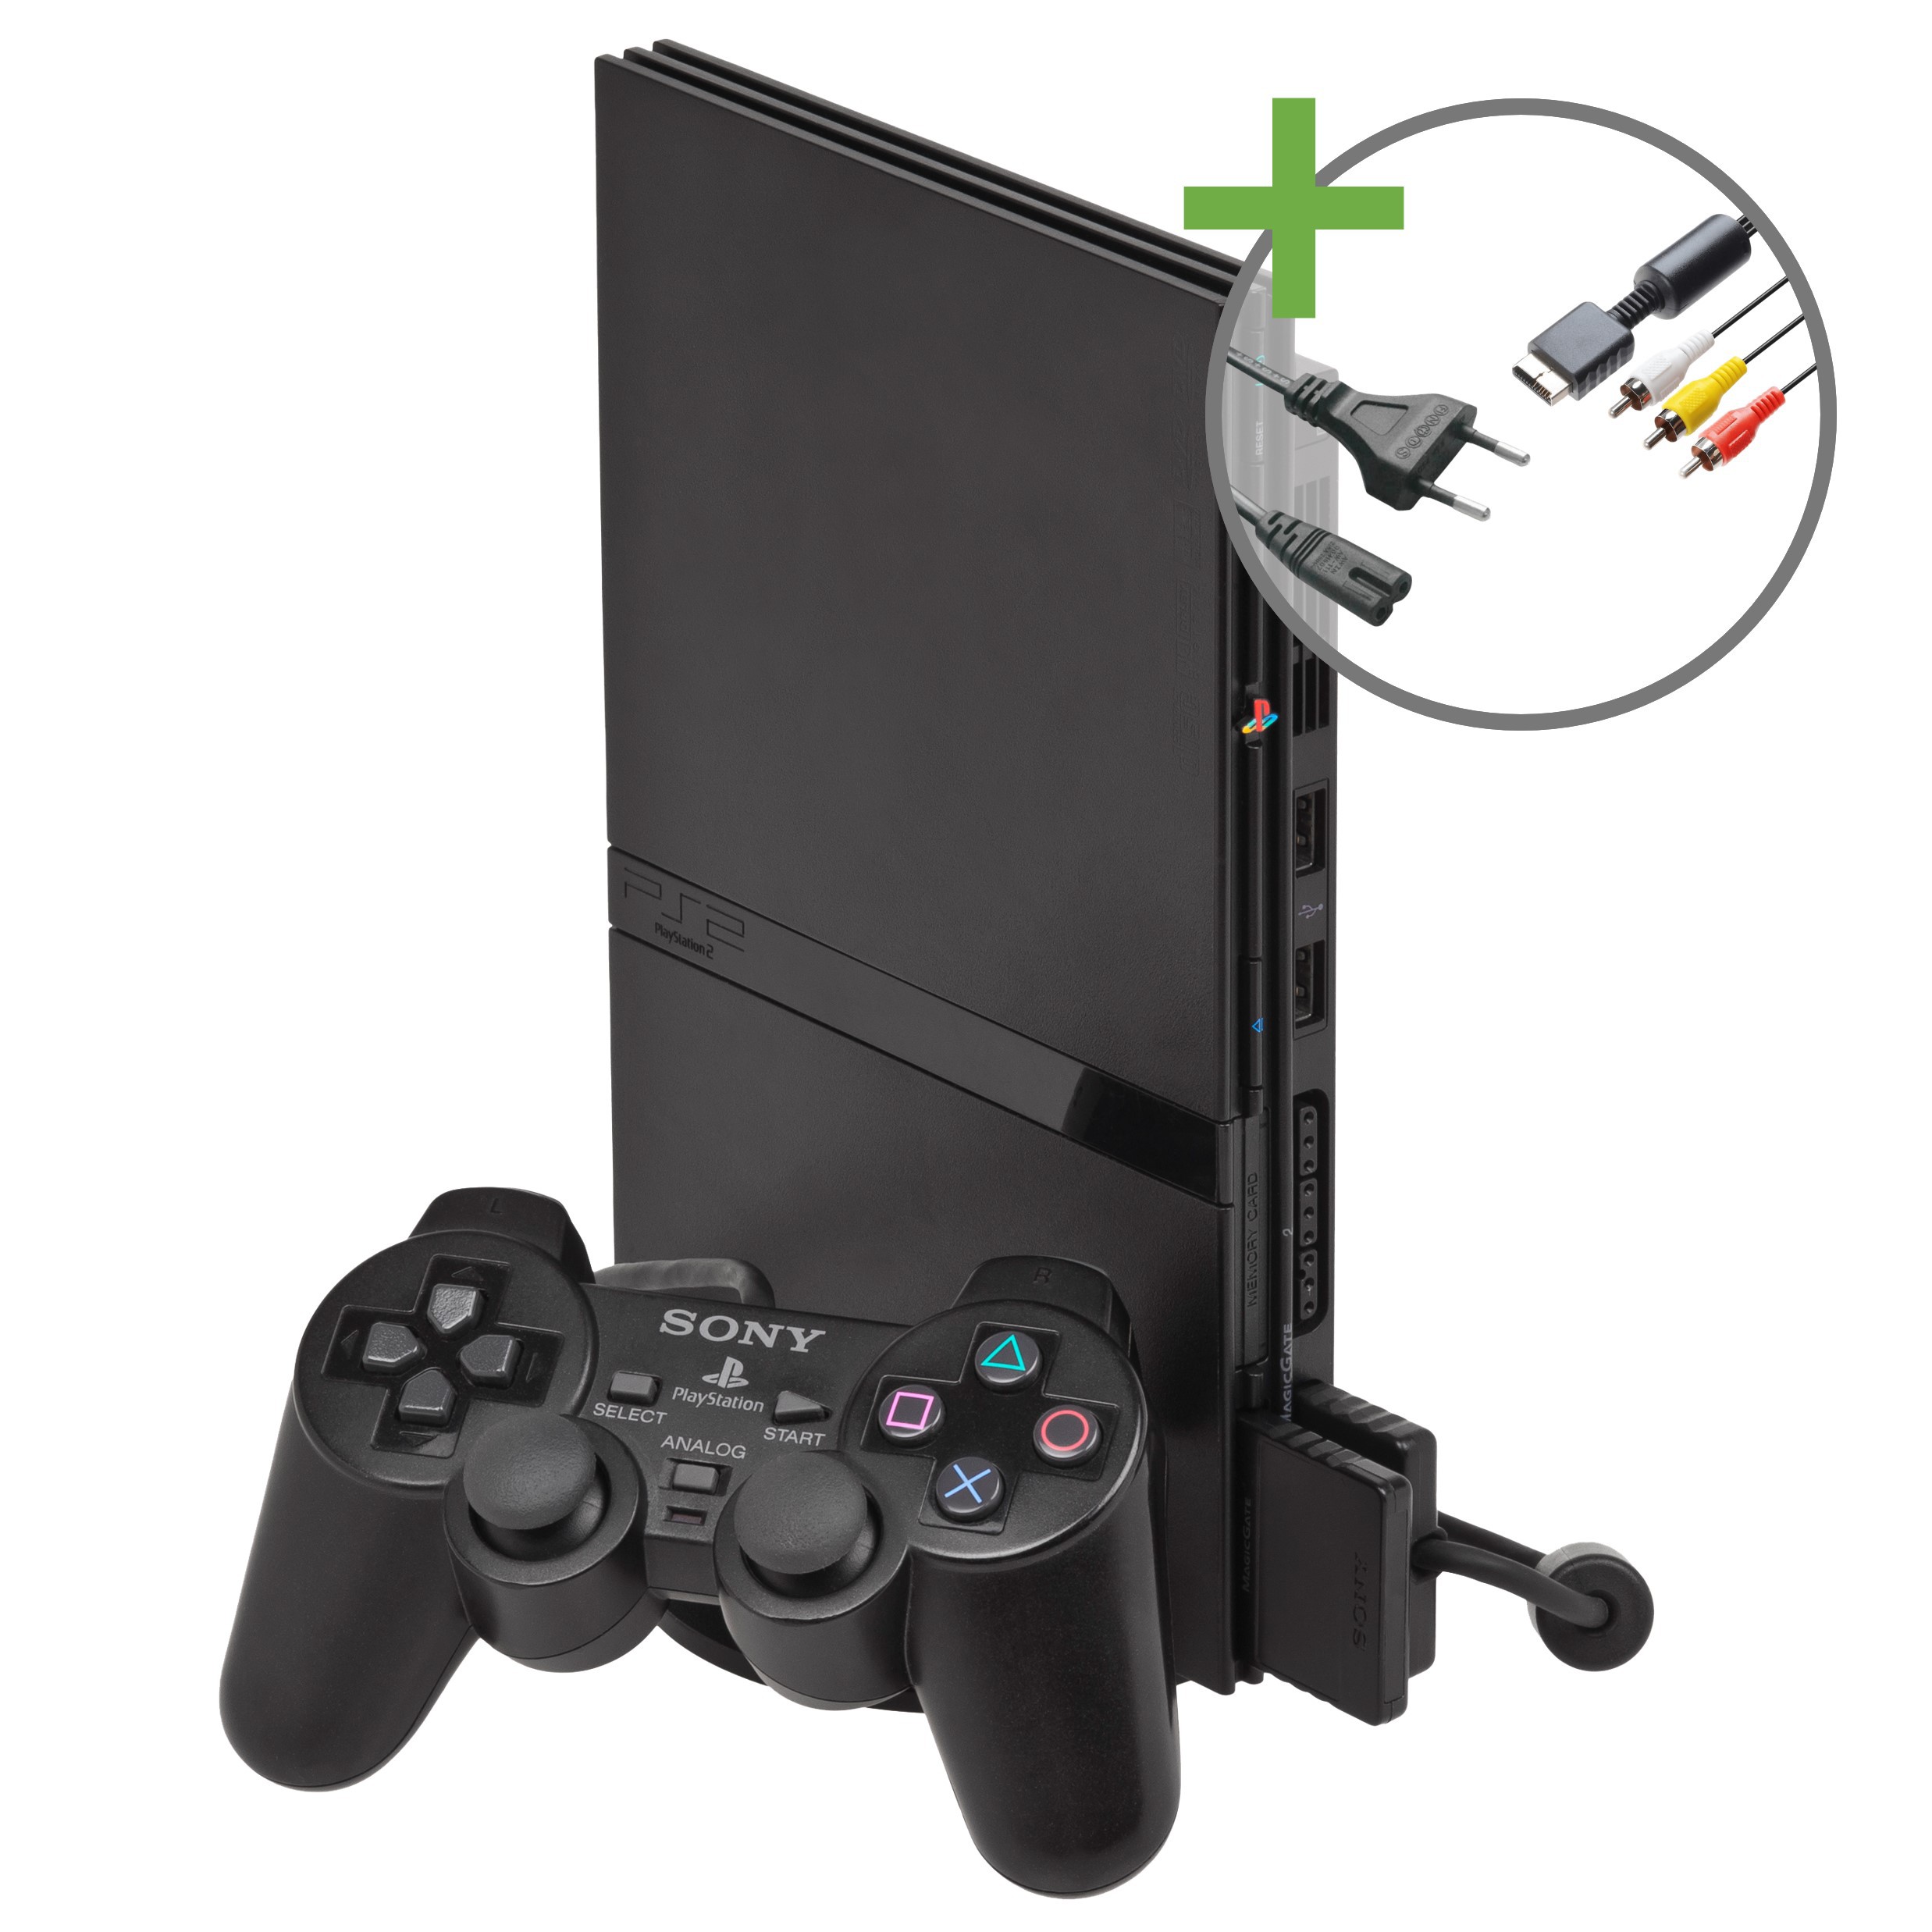 Sony PlayStation 2 Slim Starter Pack - Black Edition Kopen | Playstation 2 Hardware